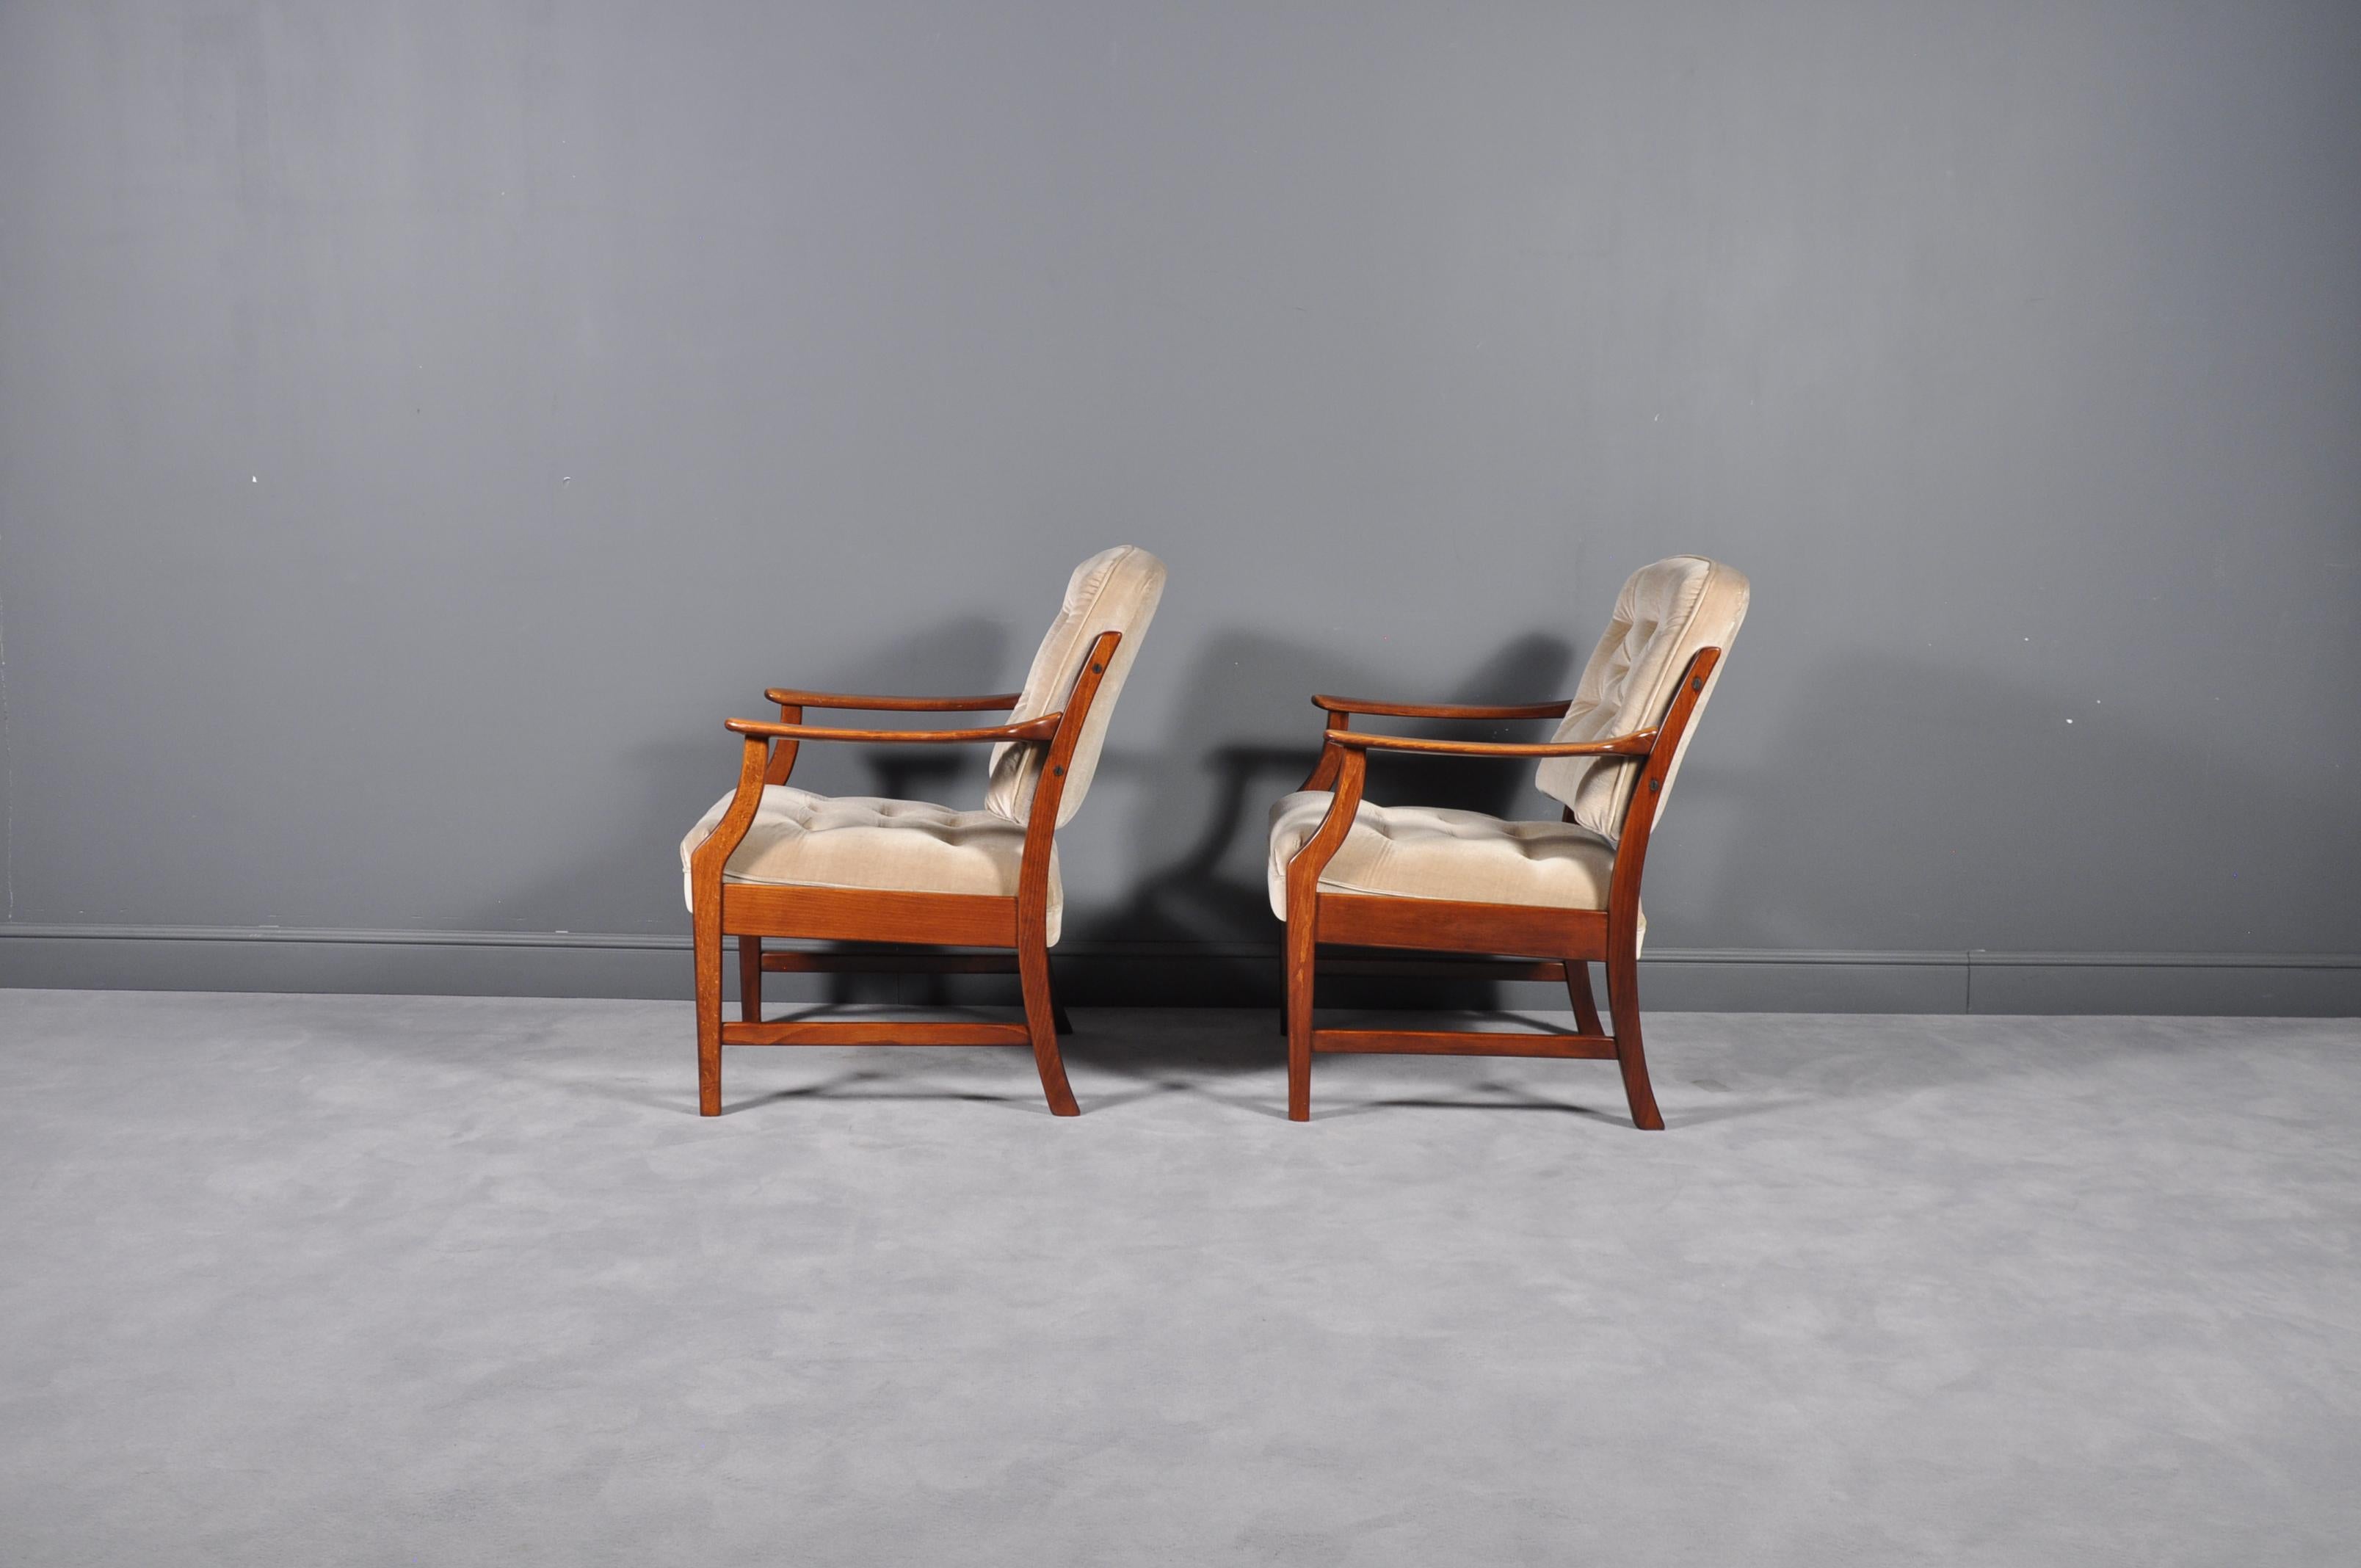 Pair of very clean original upholstery teak Danish Mid-Century Modern arm dining chairs.